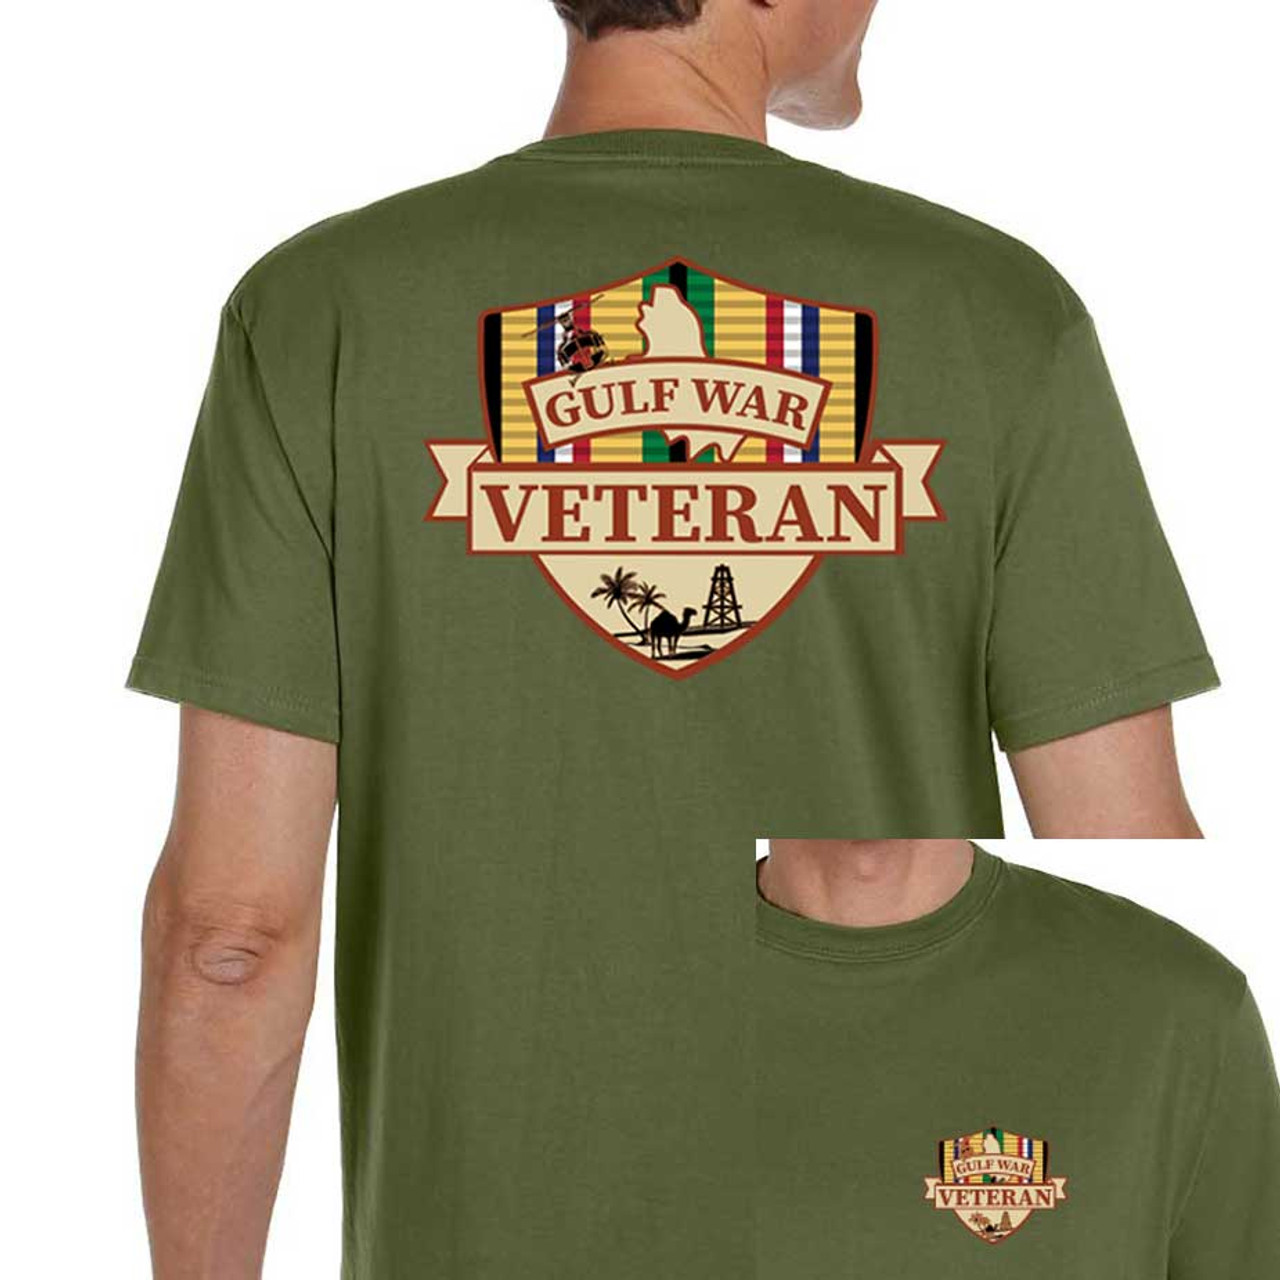 Gulf War Veteran T-shirt with Shield and Ribbon Graphic